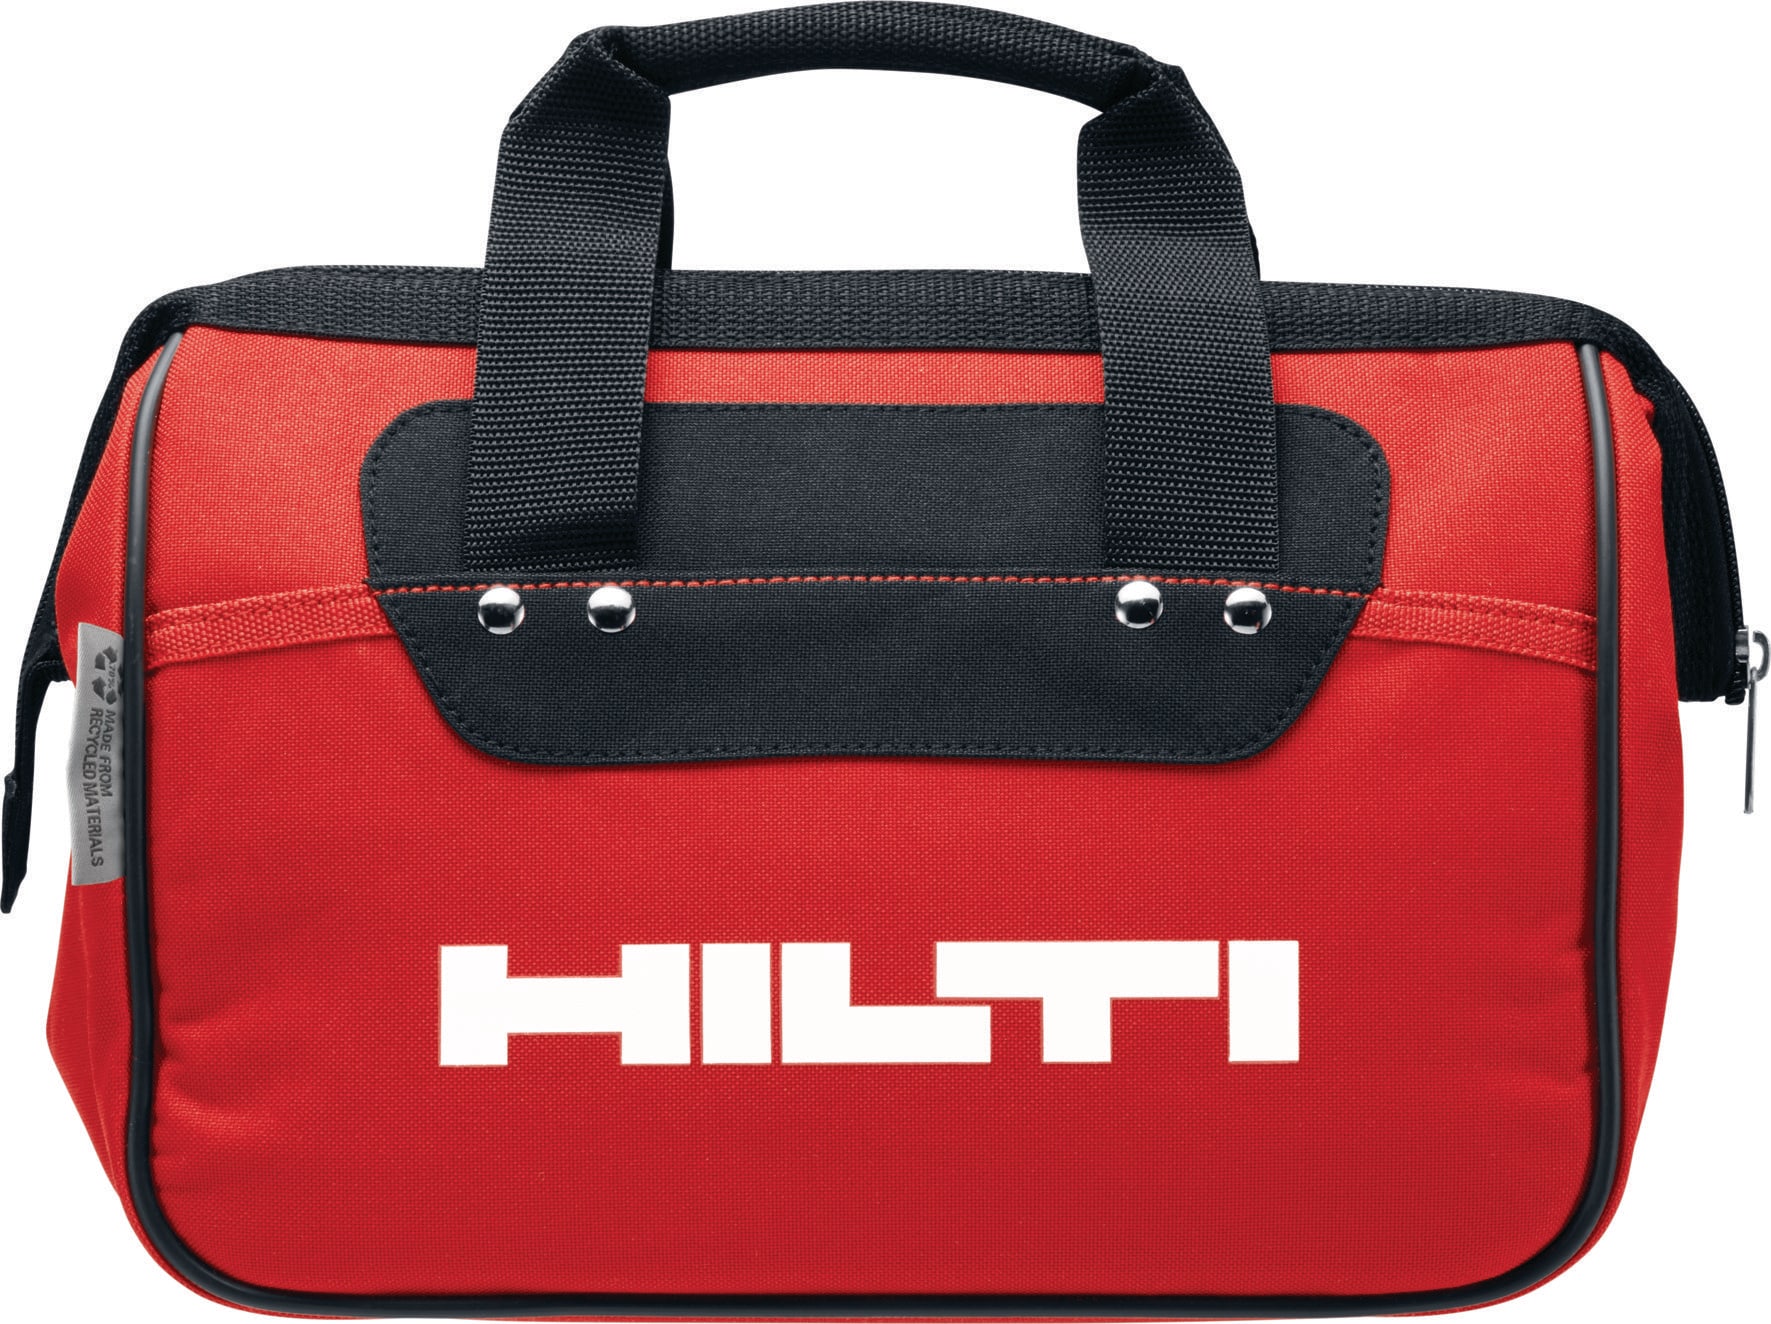  для инструмента S - Чемоданы и сумки для инструментов - Hilti .